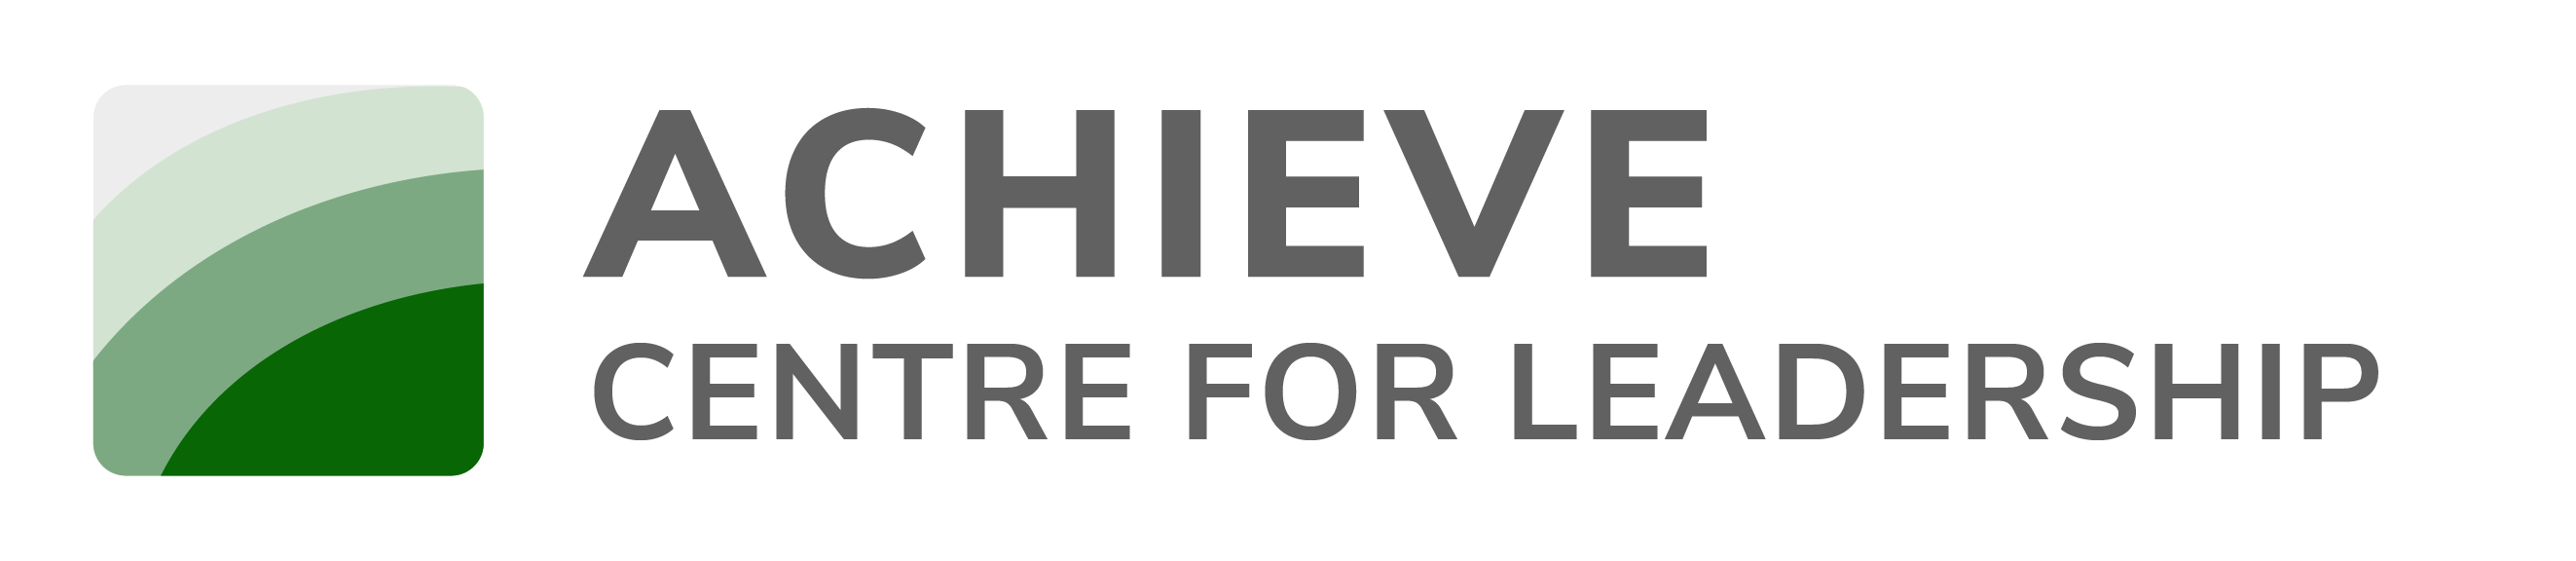 Achieve - Centre for Leadership